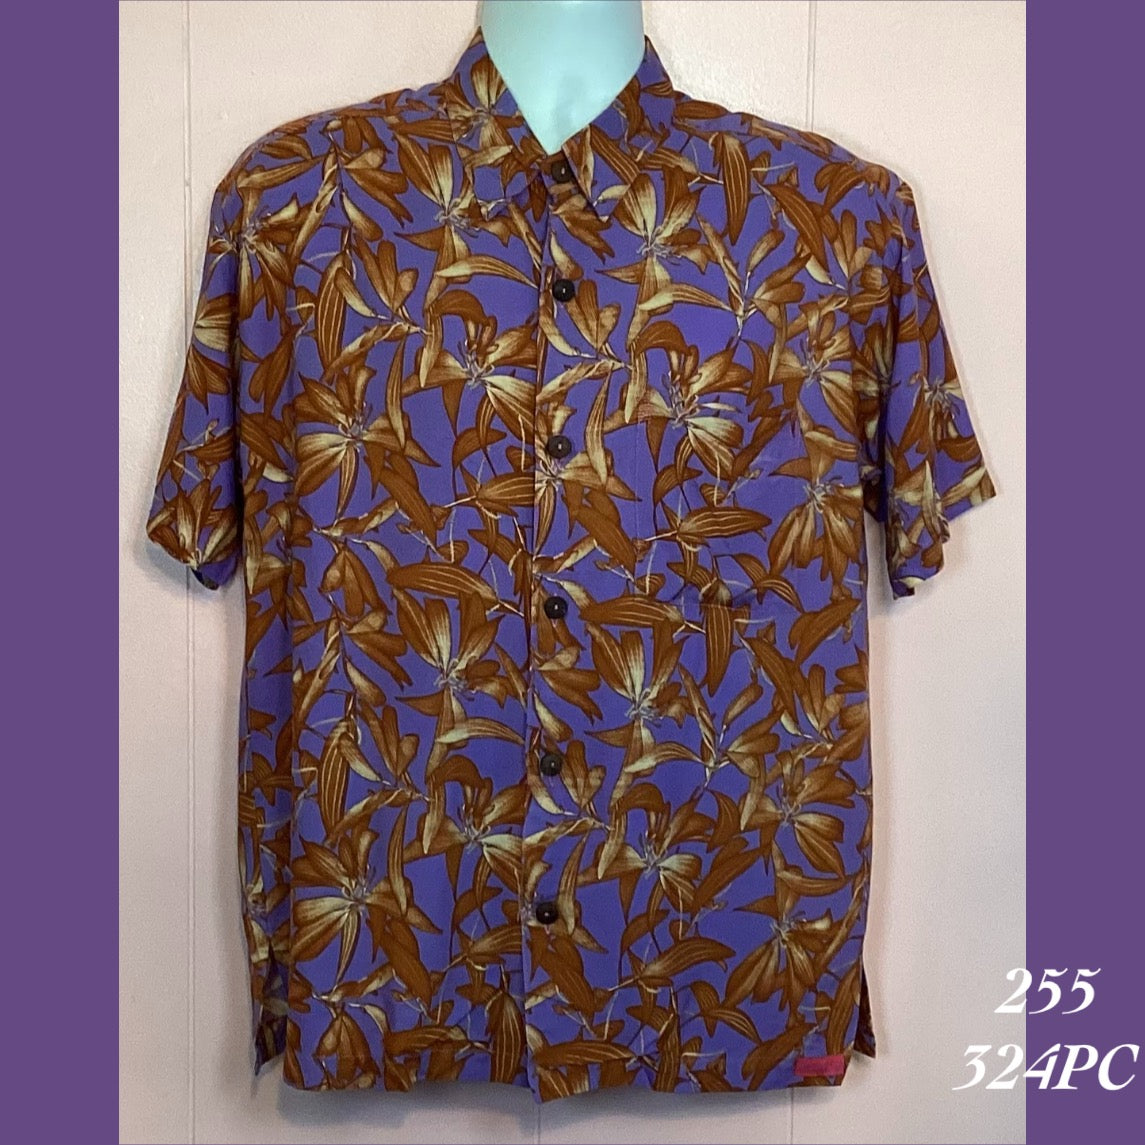 255 - 324PC , Men's Aloha shirt